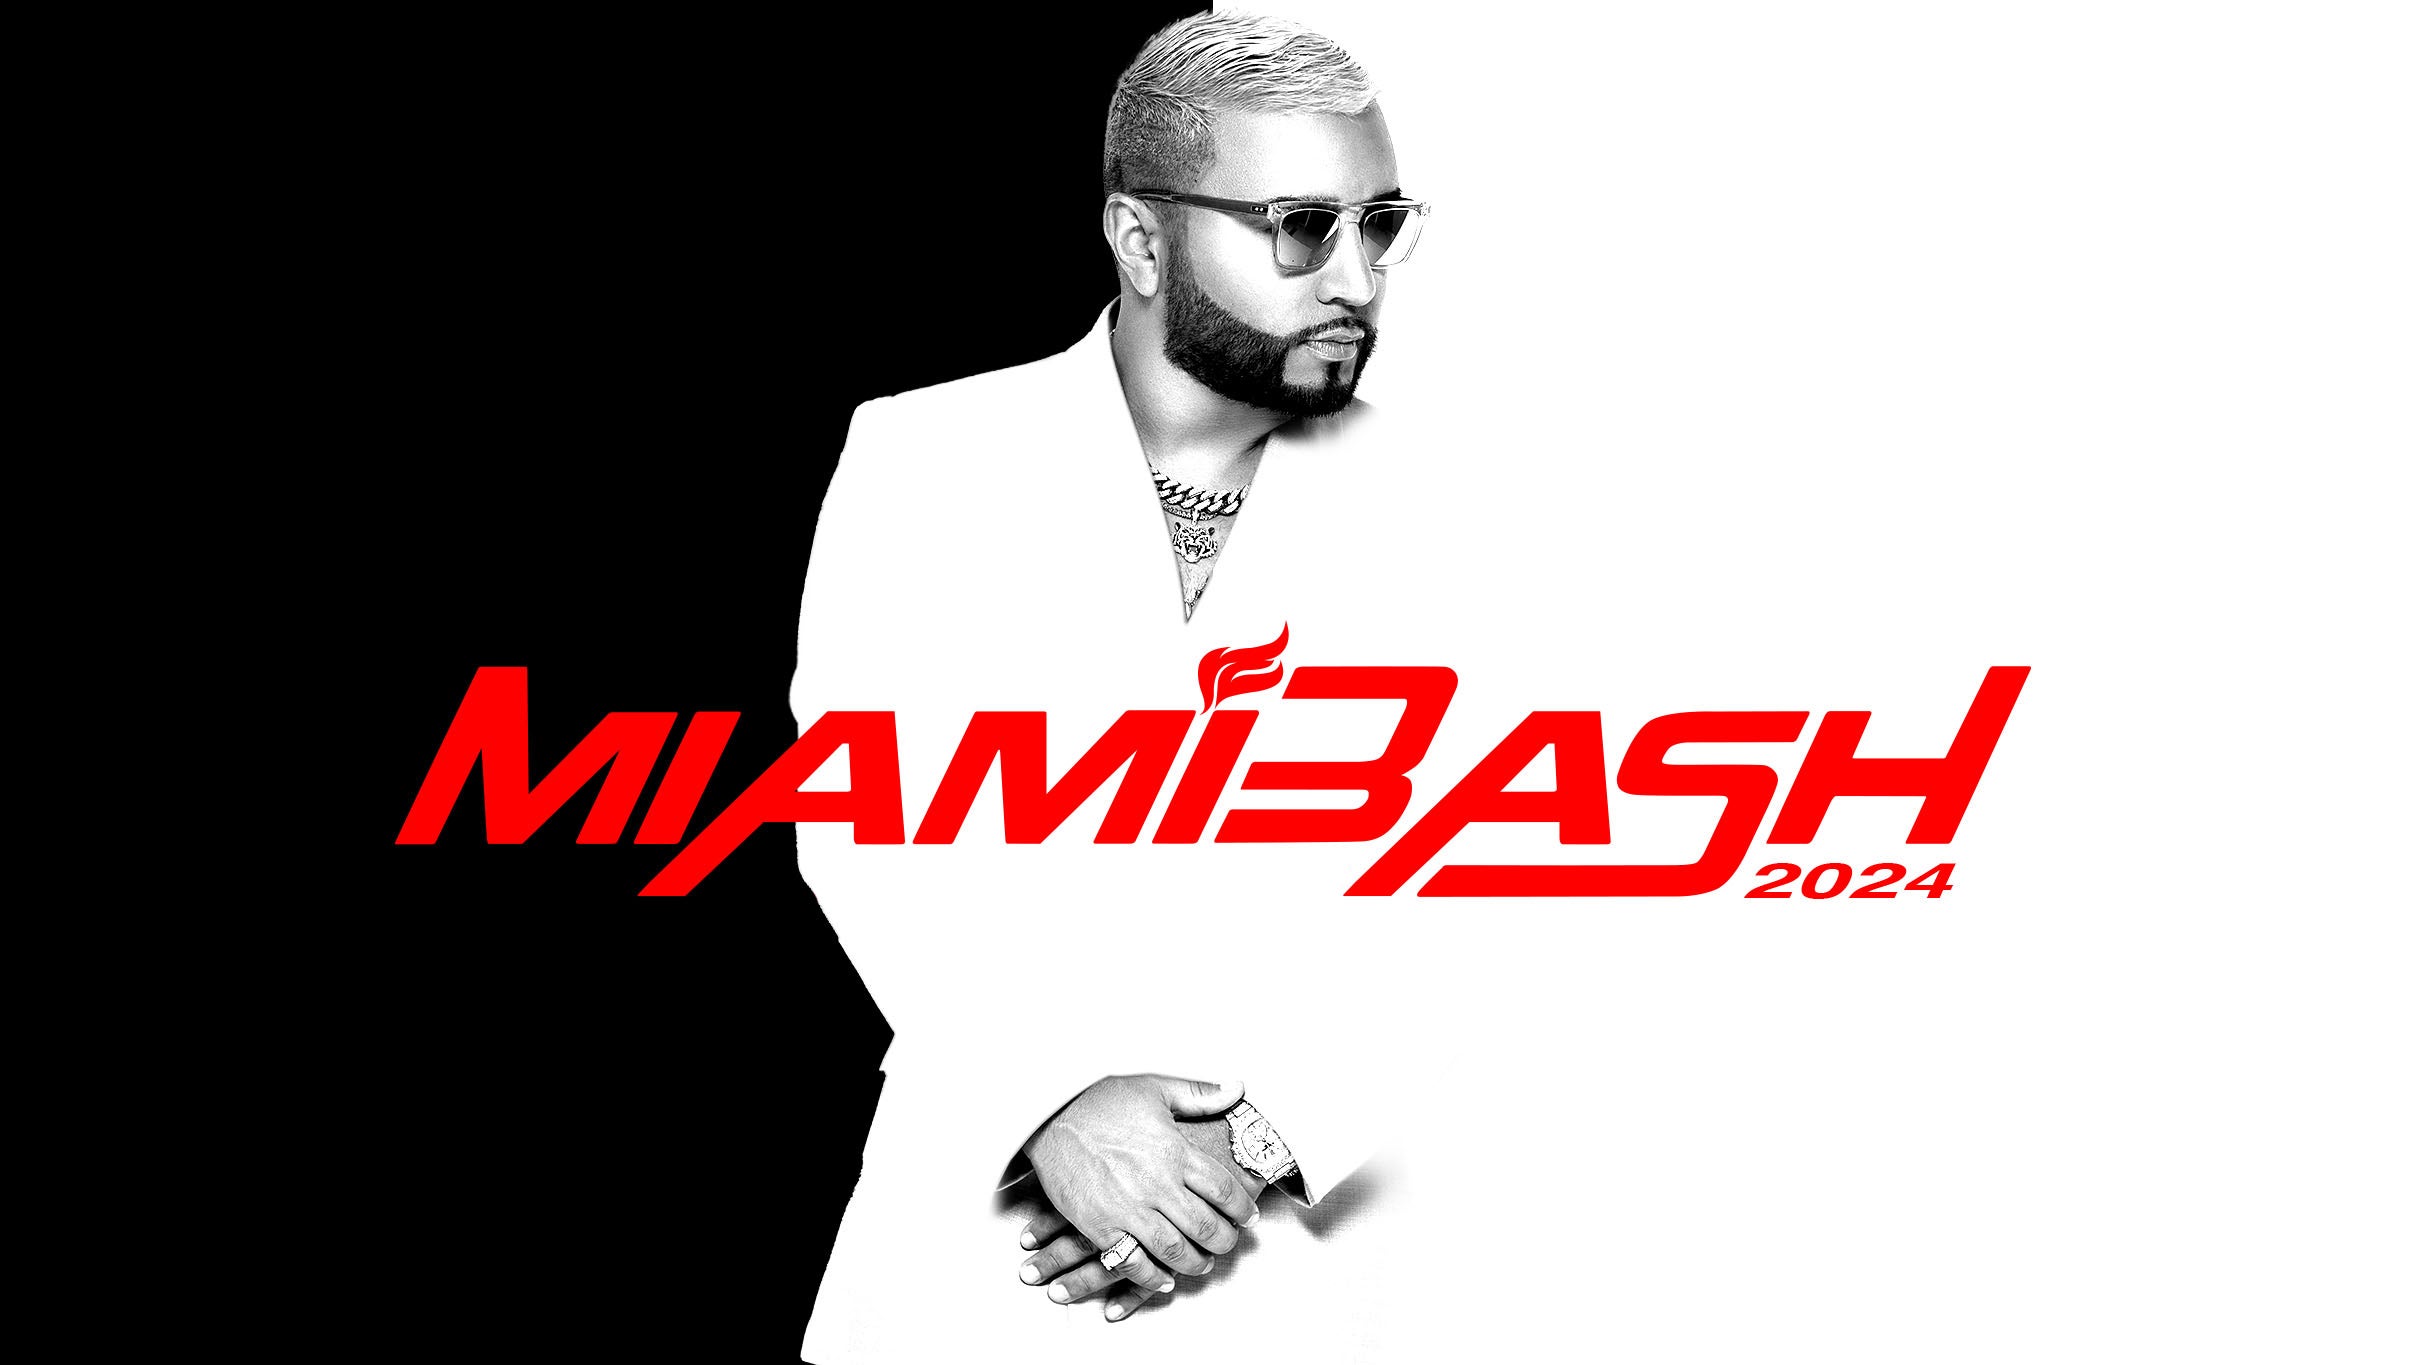 MiamiBash 2024 by Alex Sensation in Miami promo photo for Official Platinum presale offer code